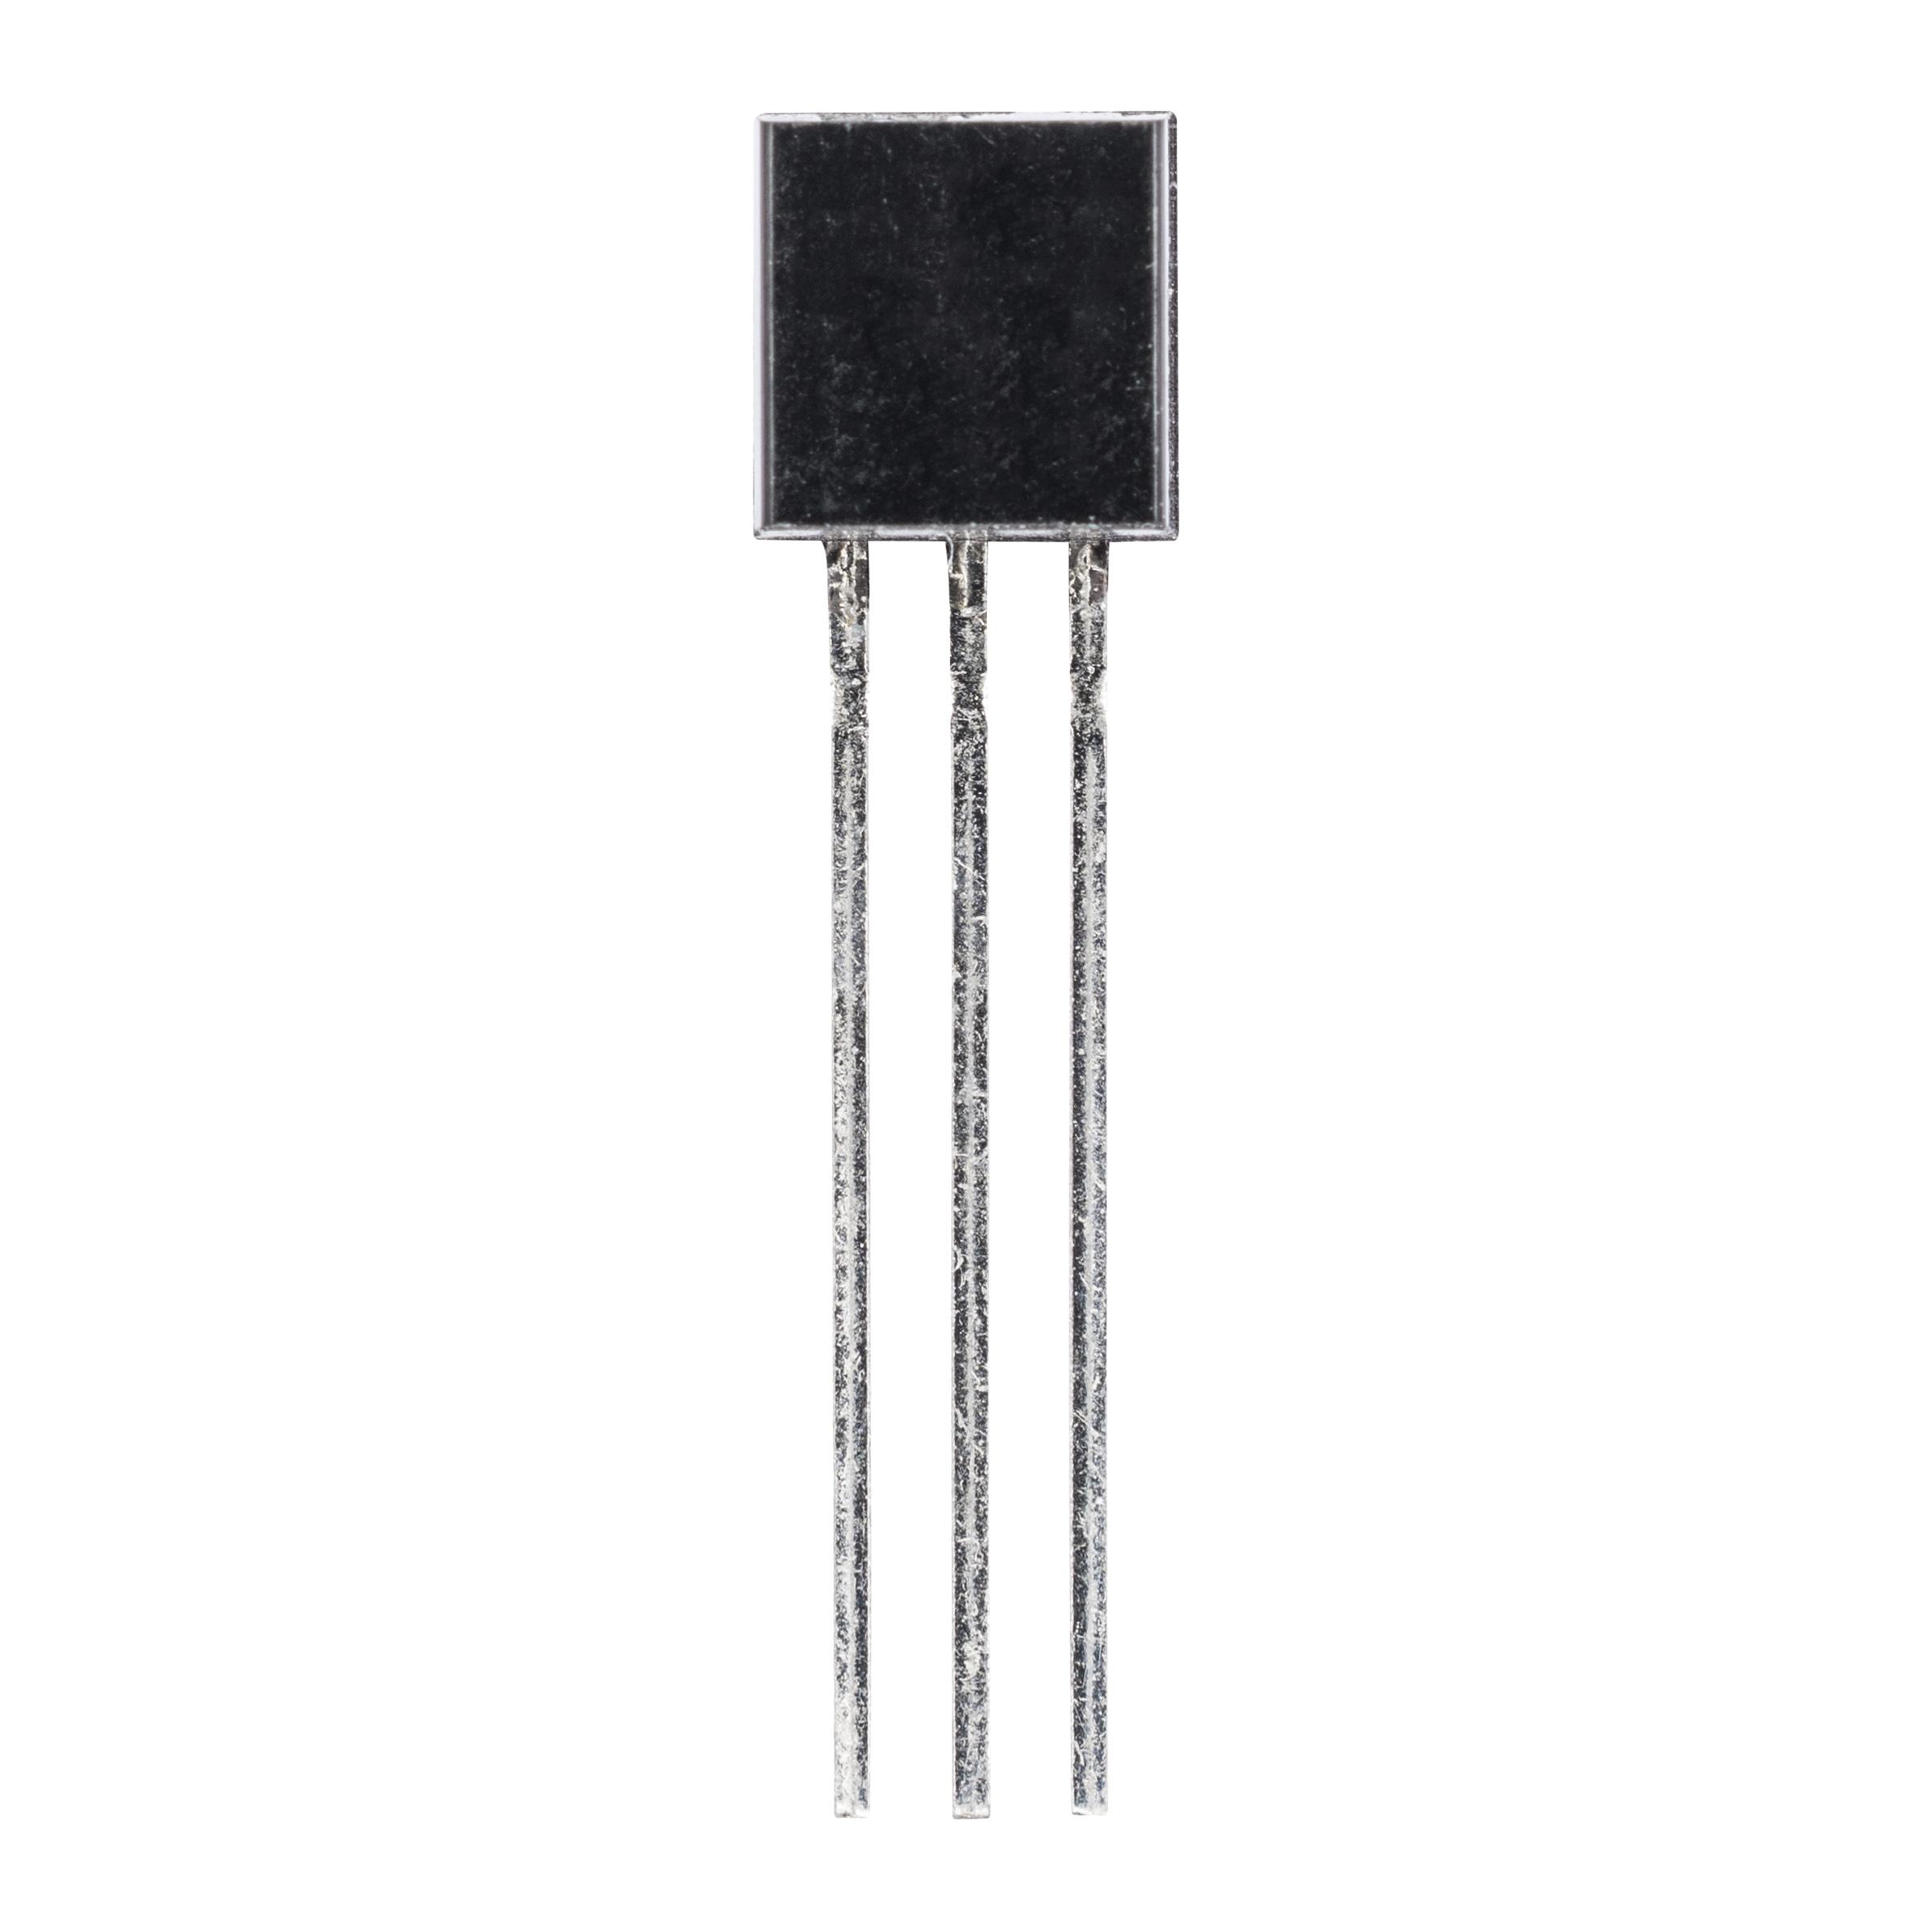 2N2222 (Bipolartransistor NPN)